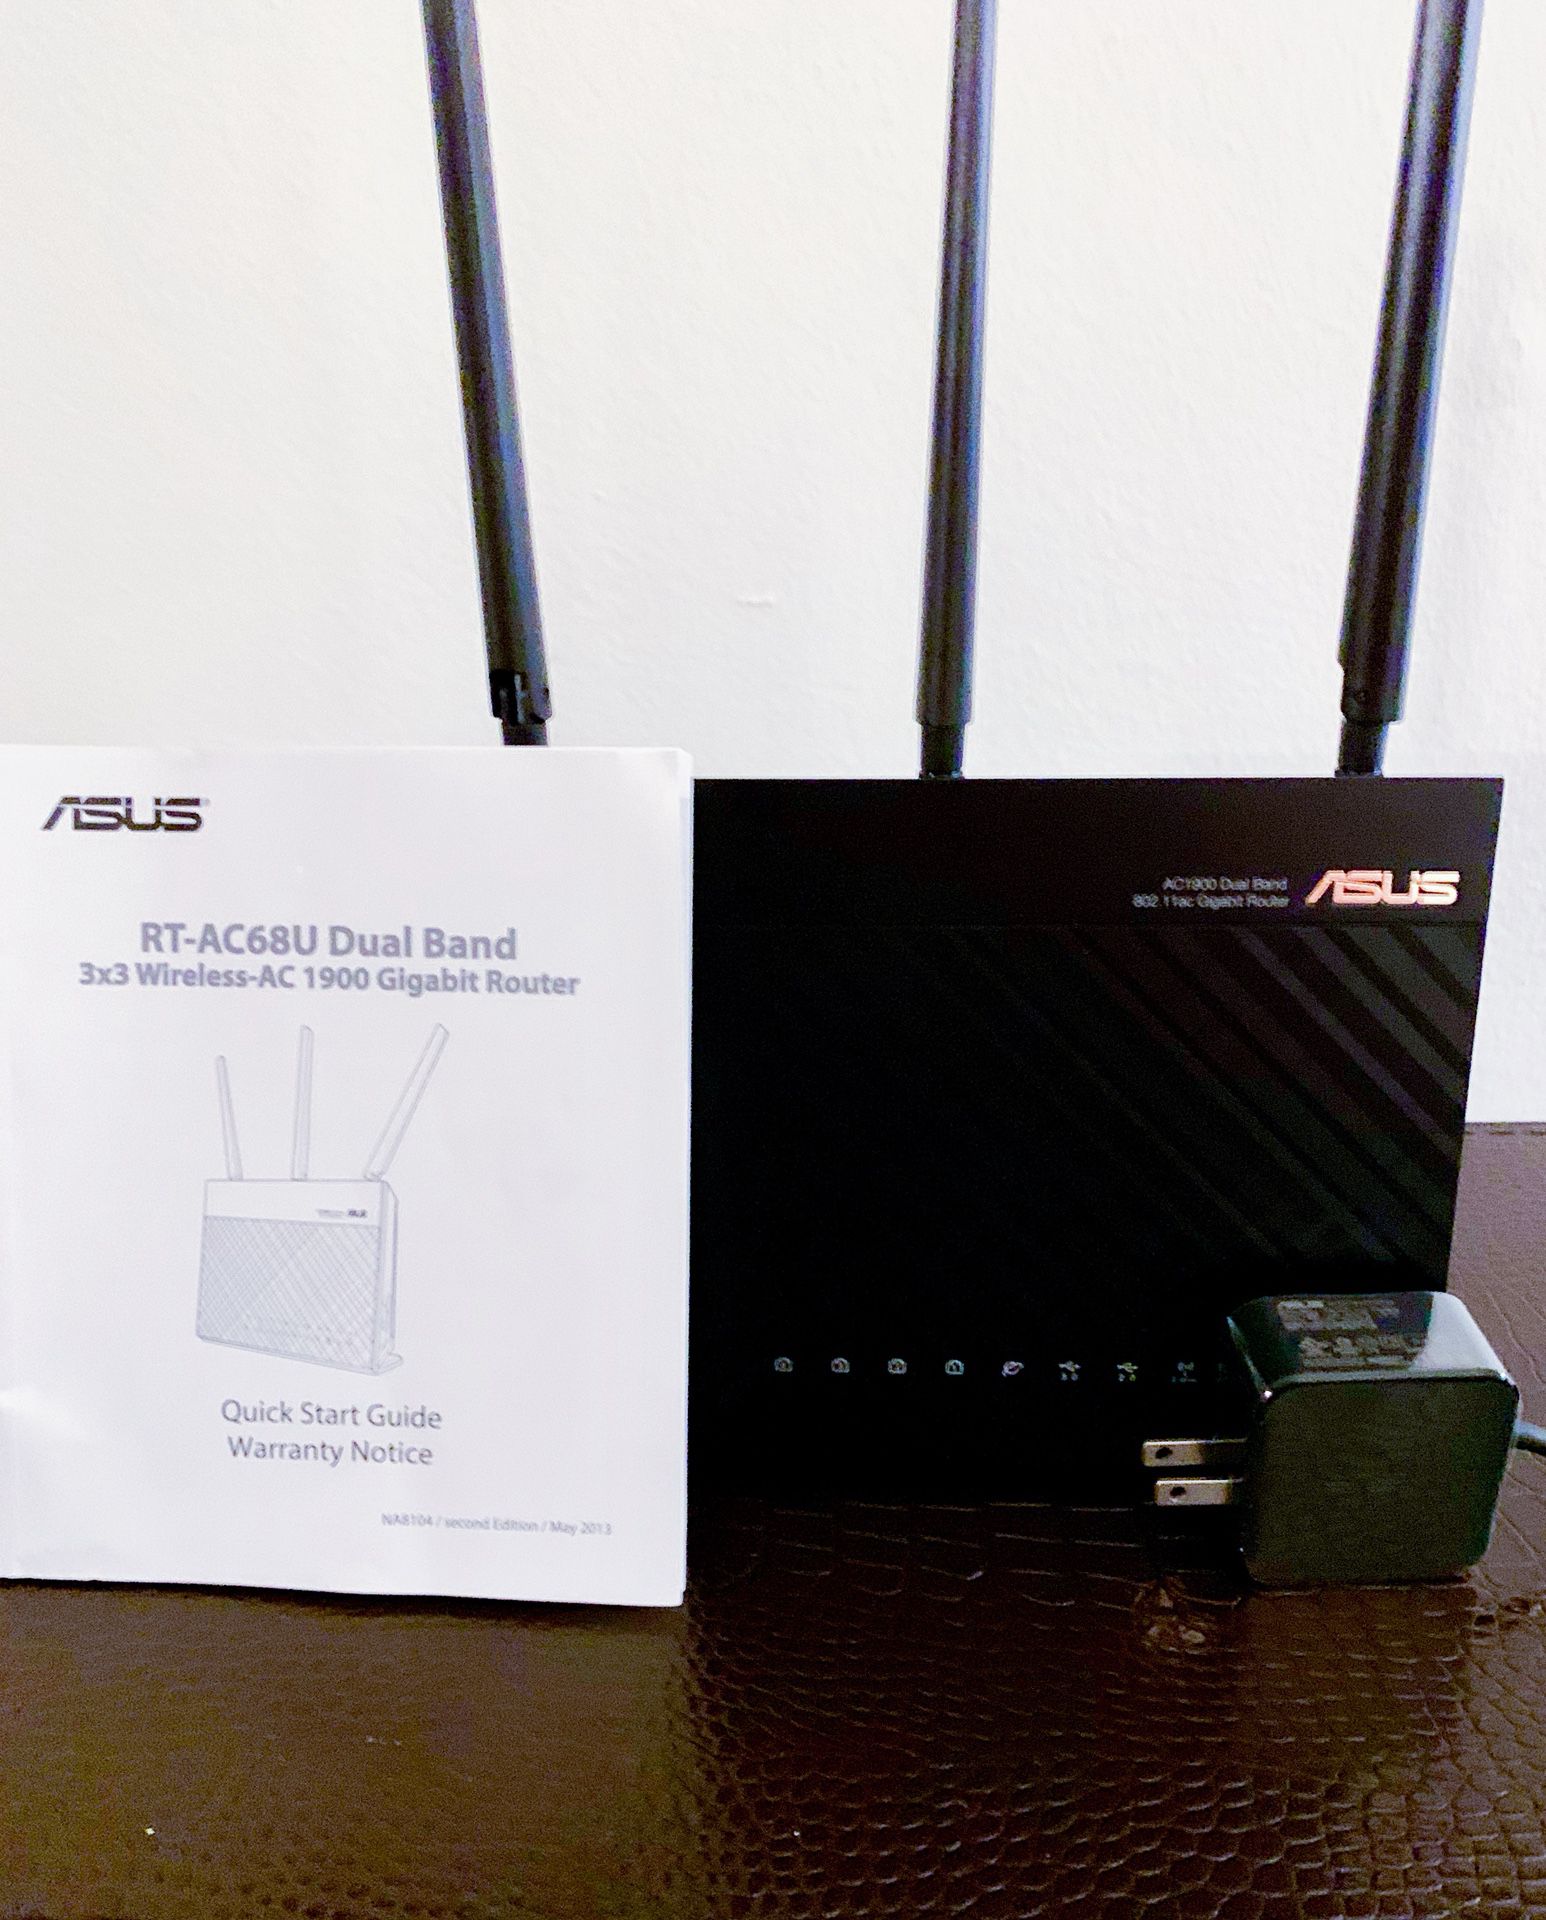 Asus AC1900 Whole Home Wireless Router - RT-AC68U - Dual-Band AiMesh